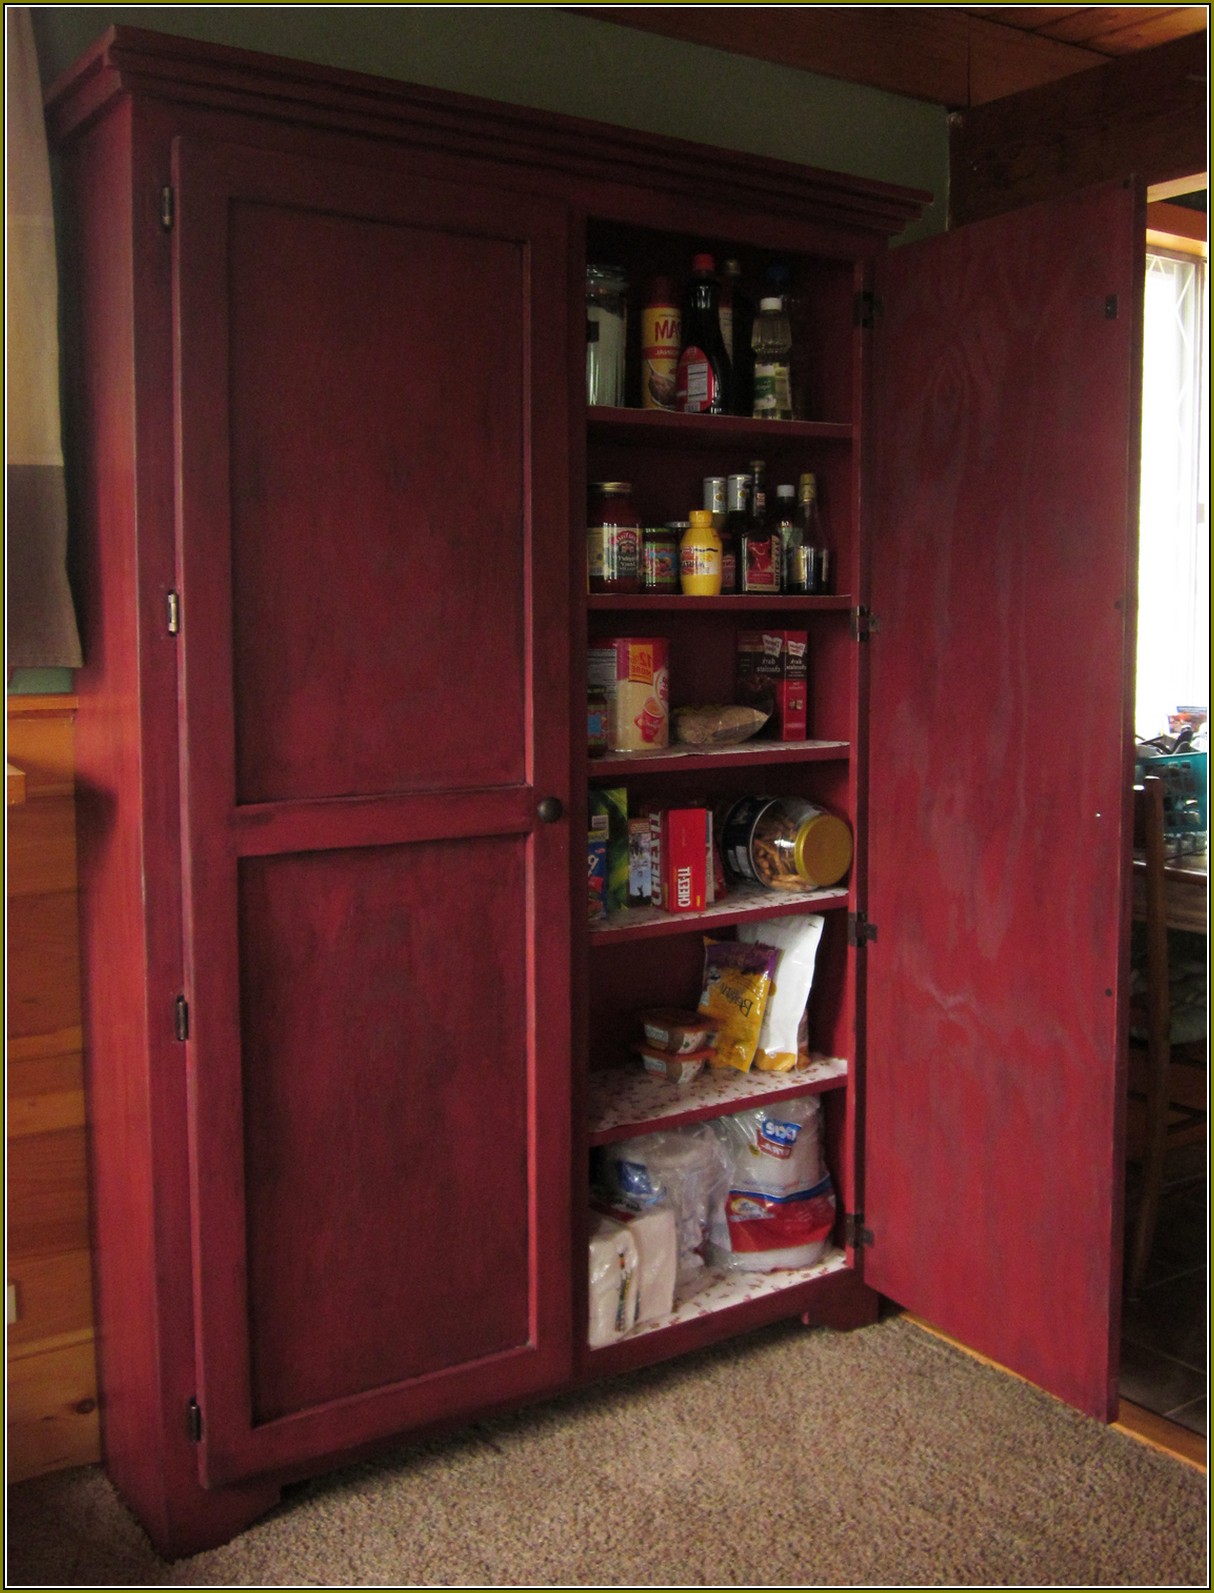 Diy Kitchen Pantry Cabinet Plans